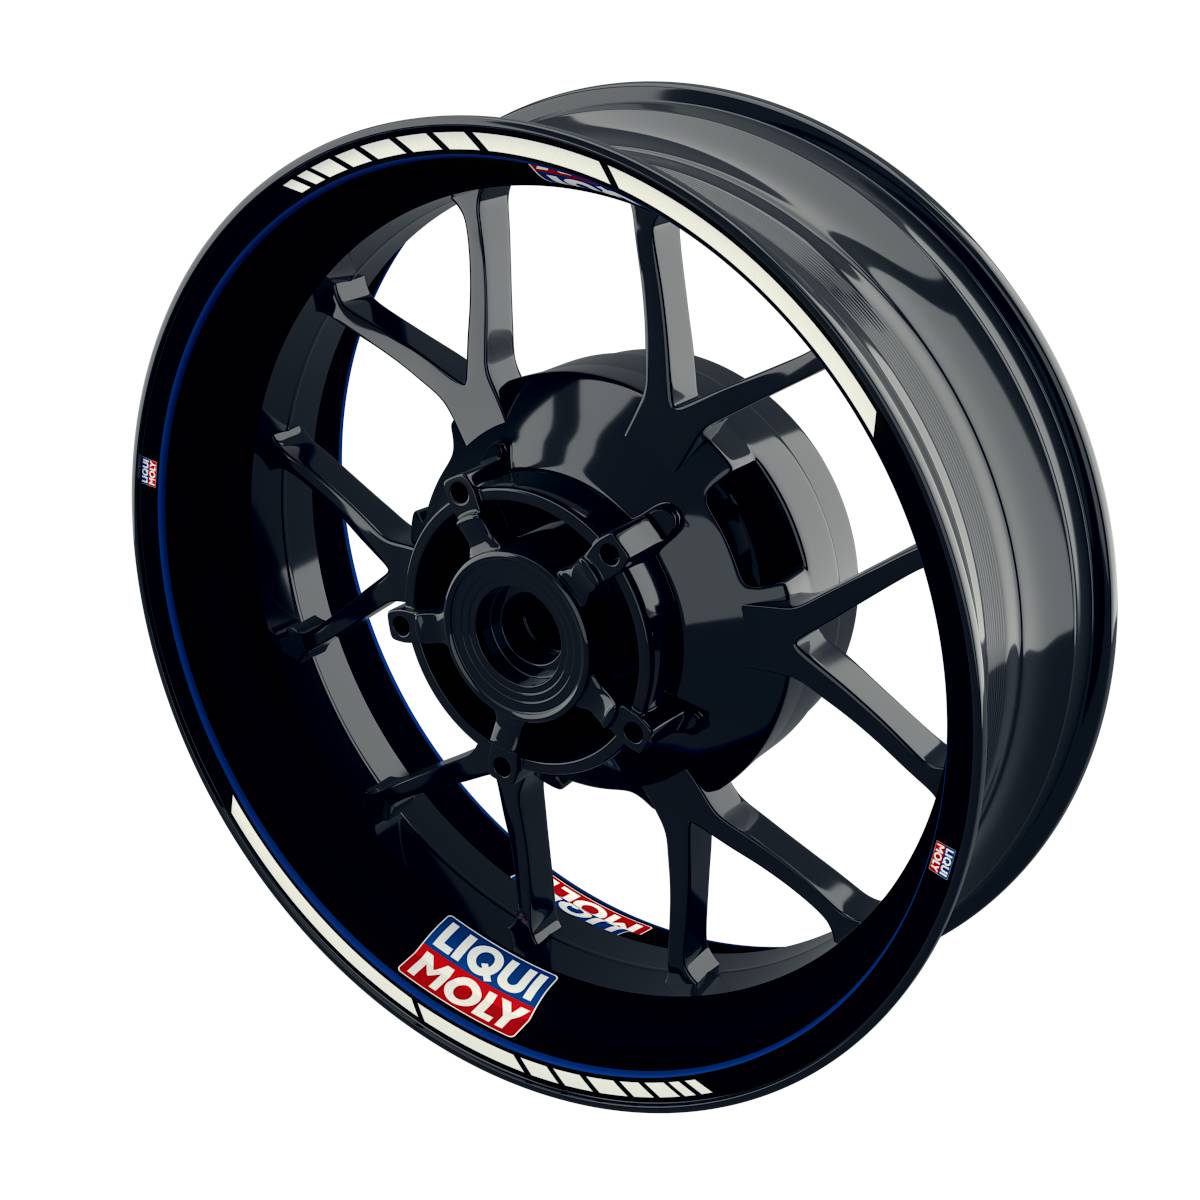 Liqui Moly Rim Decals Motiv Clean black Wheelsticker Premium